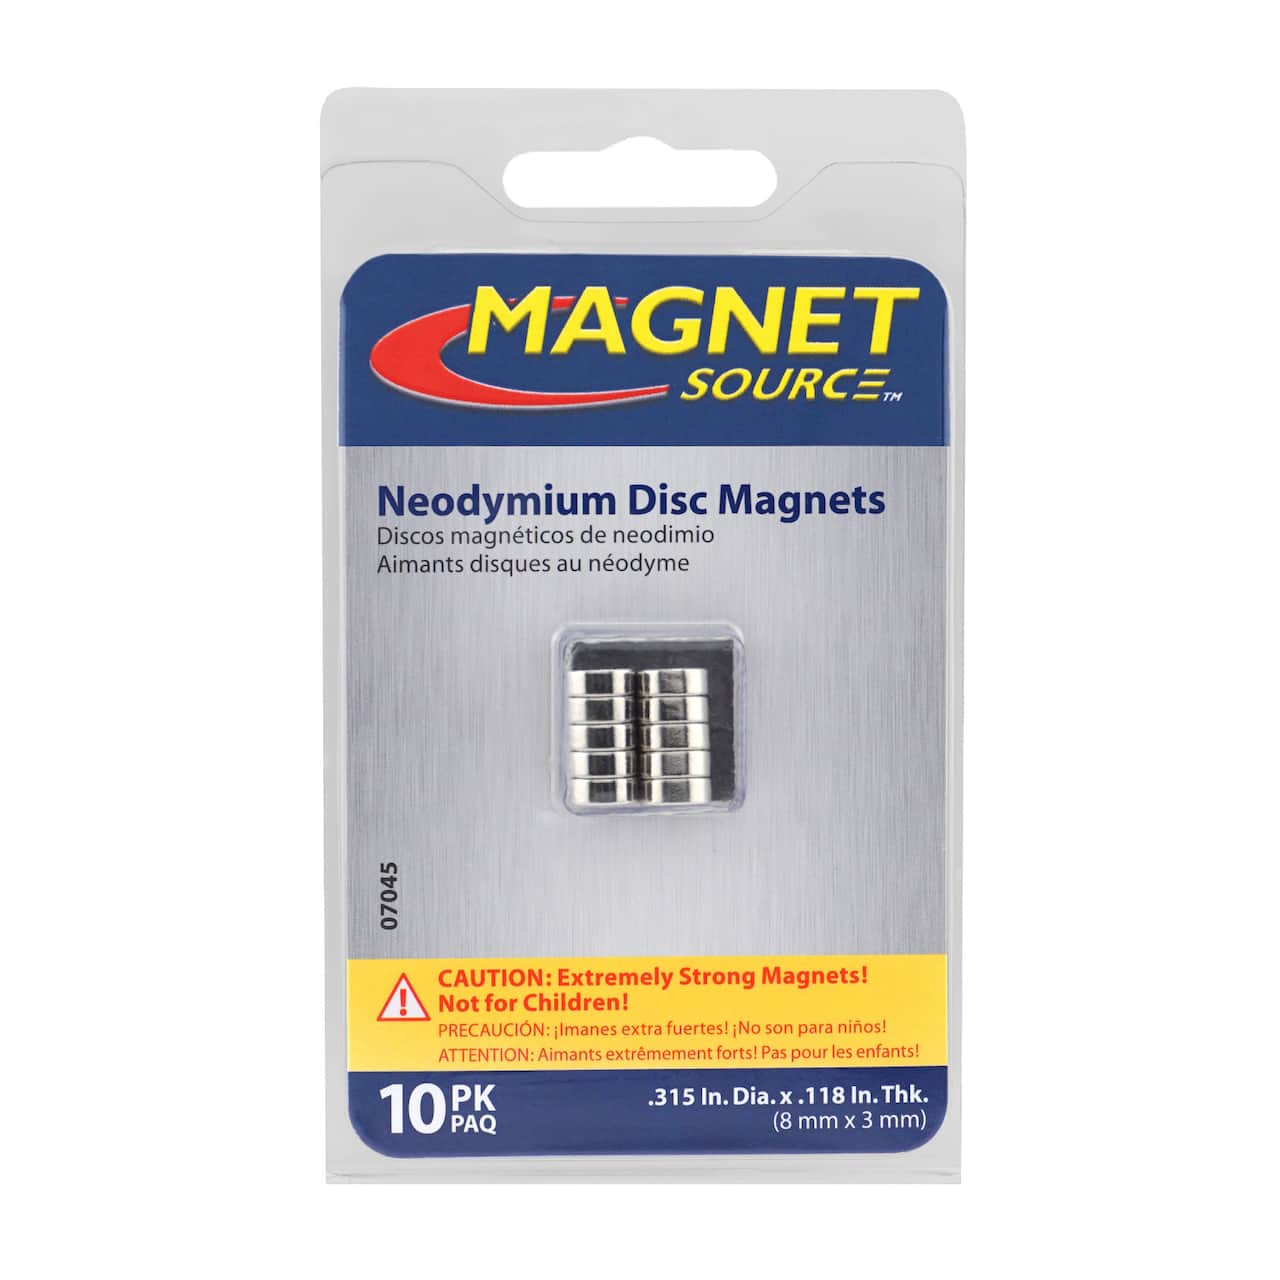 The Magnet Source Super Neodymium Disc Magnets, 10ct.